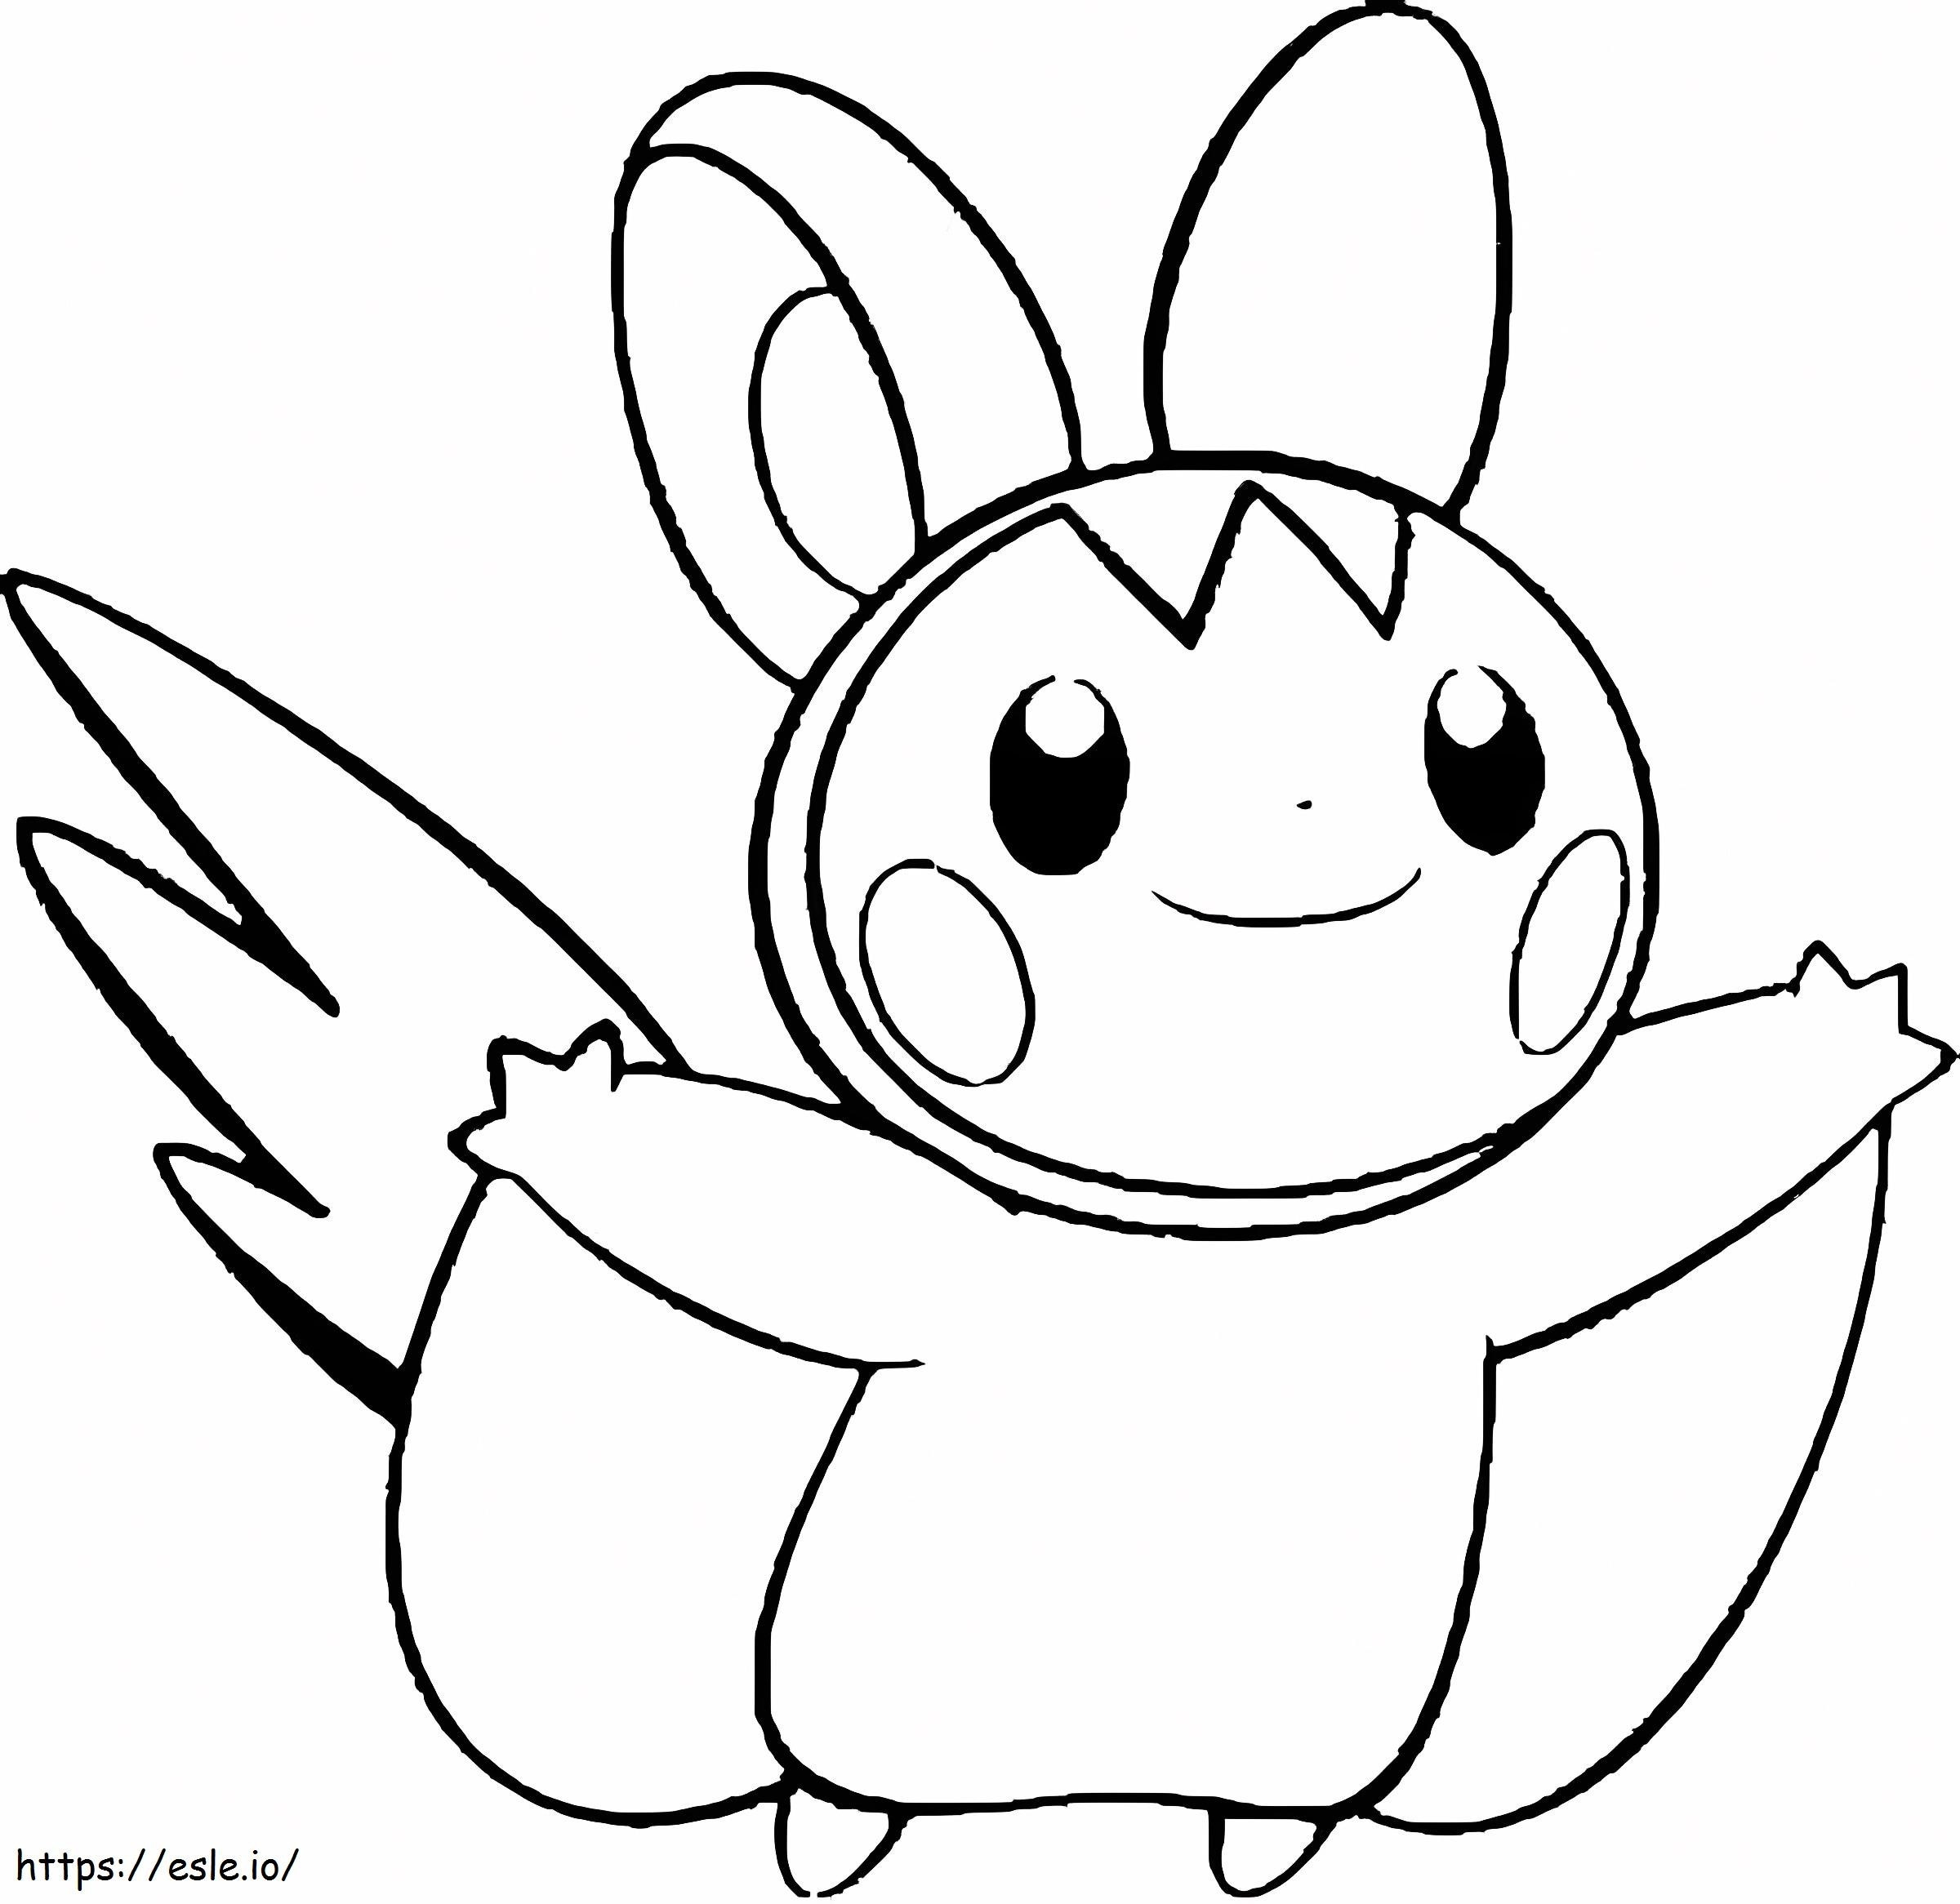 Pokemon Emolga coloring page